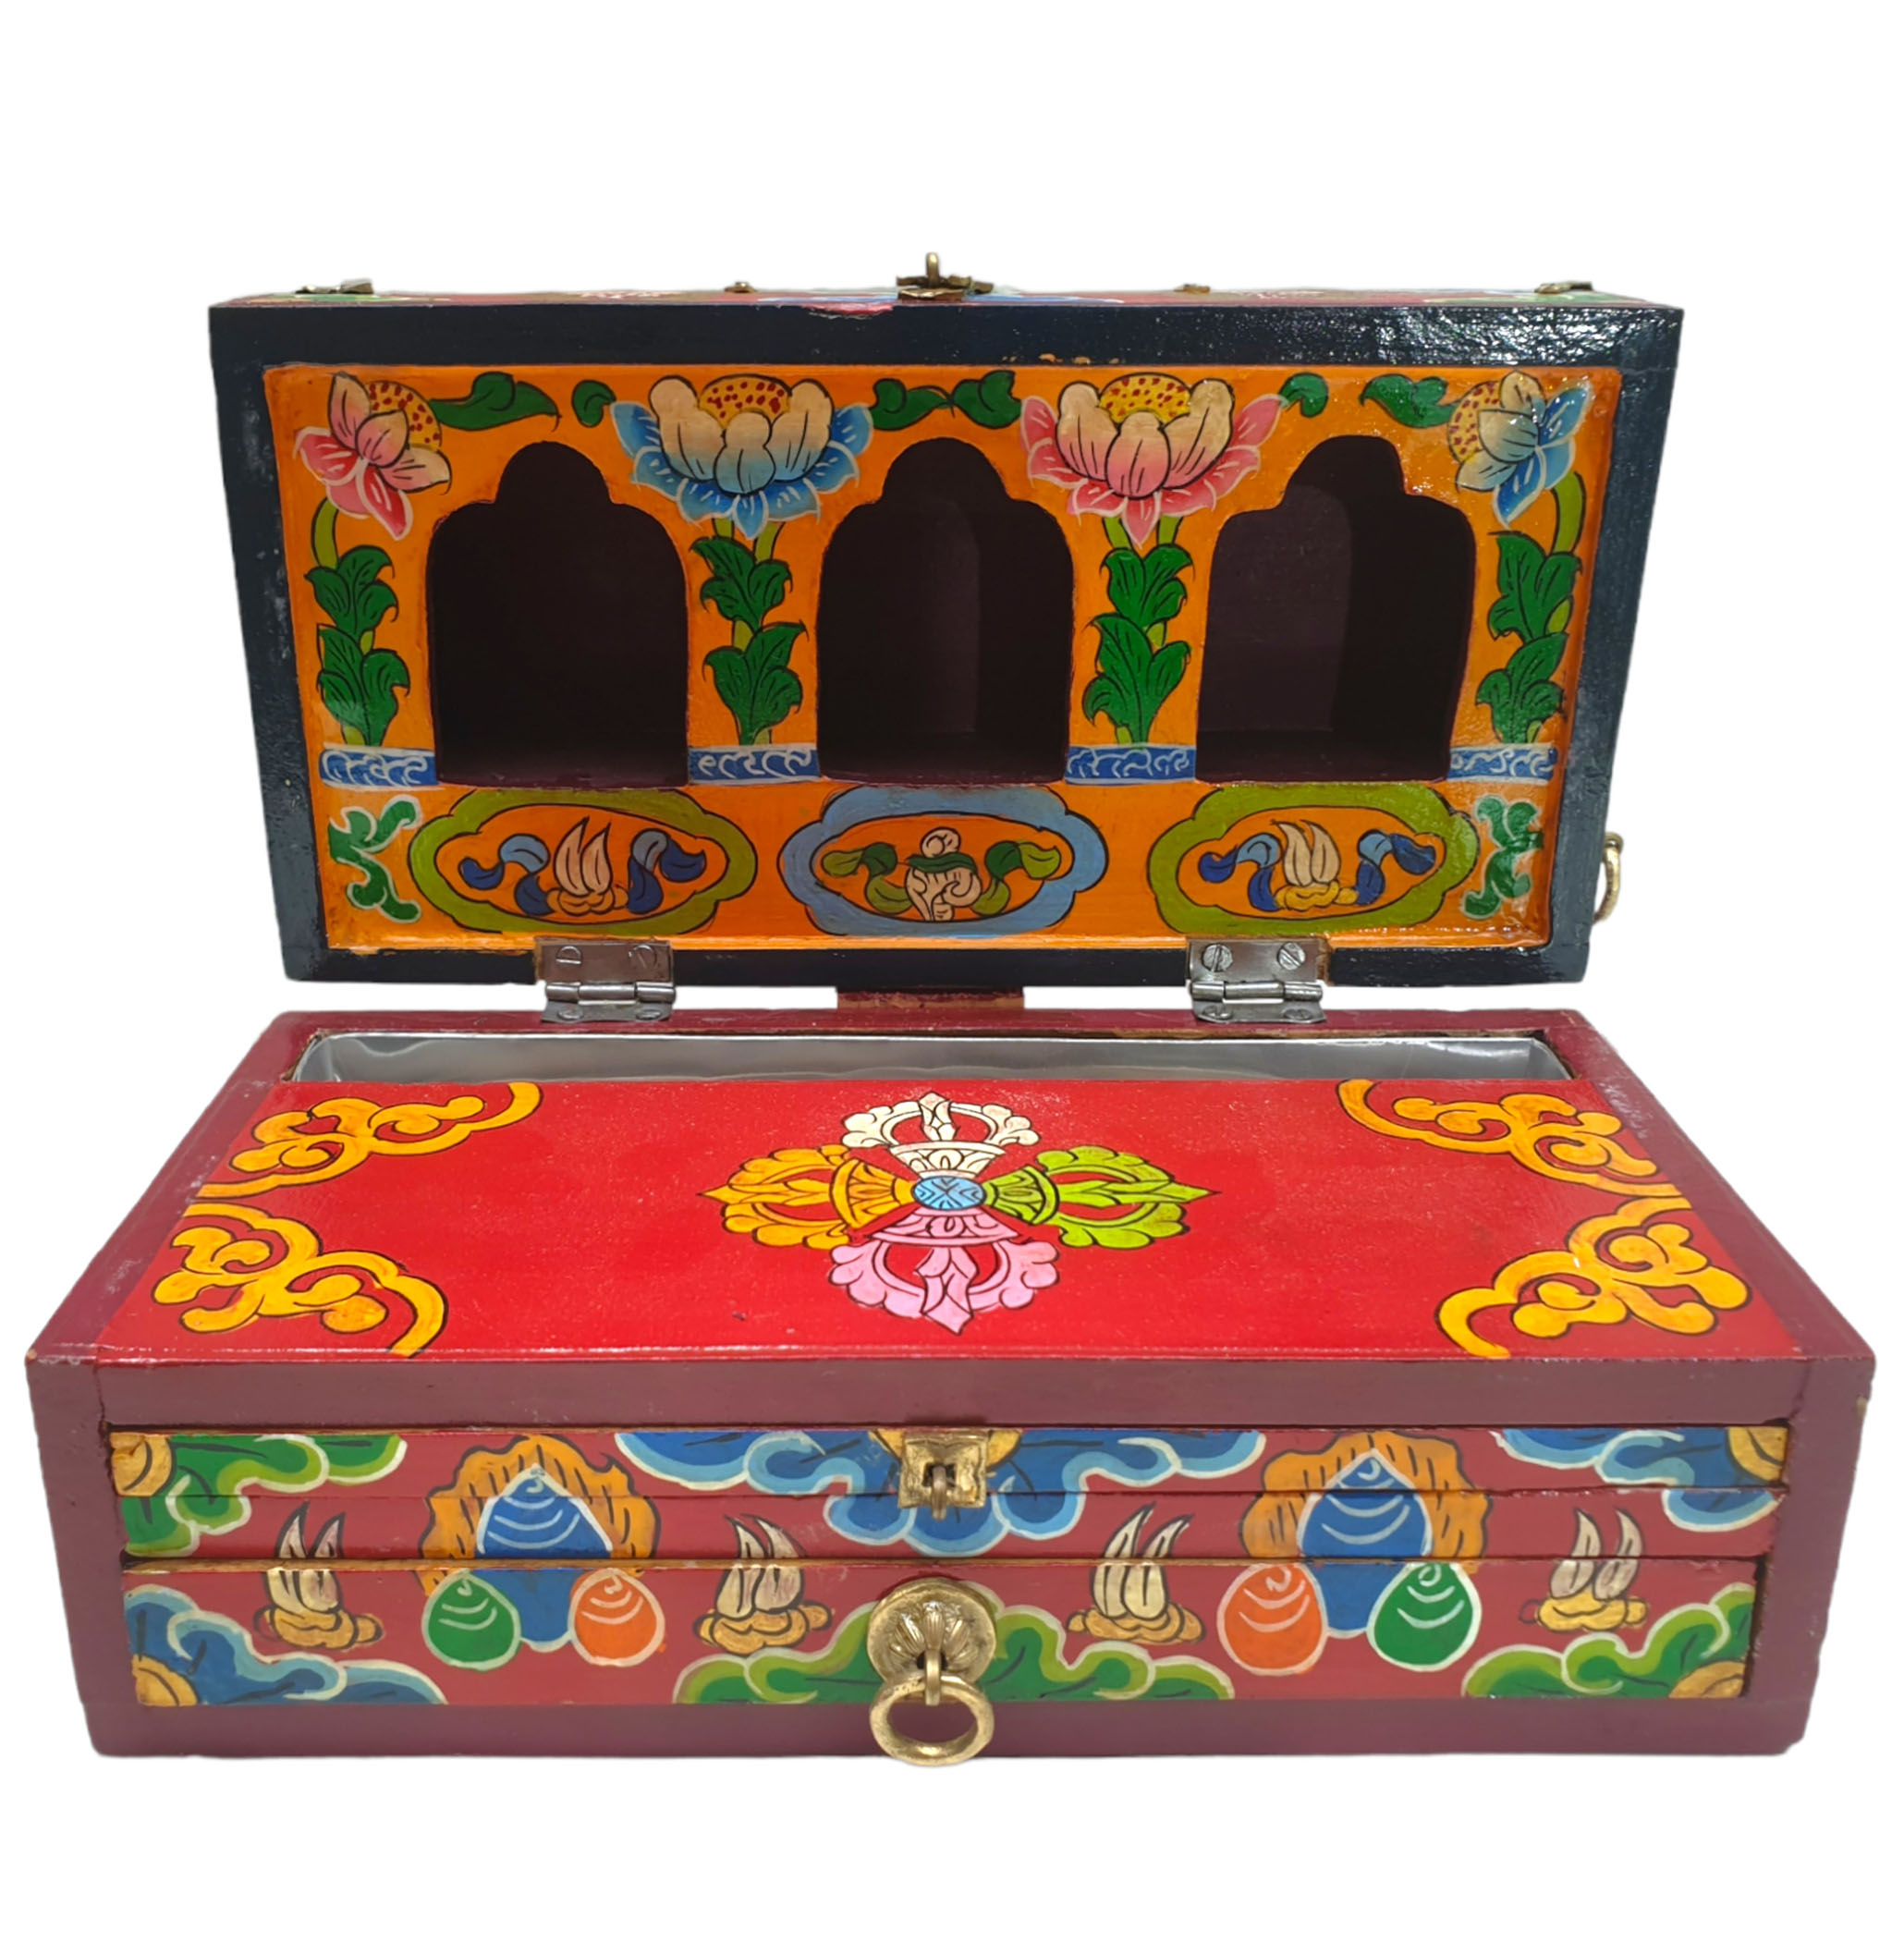 Buddhist Handmade Wooden Traveling Altar chesum Box, foldable, With Three Bodhisattava